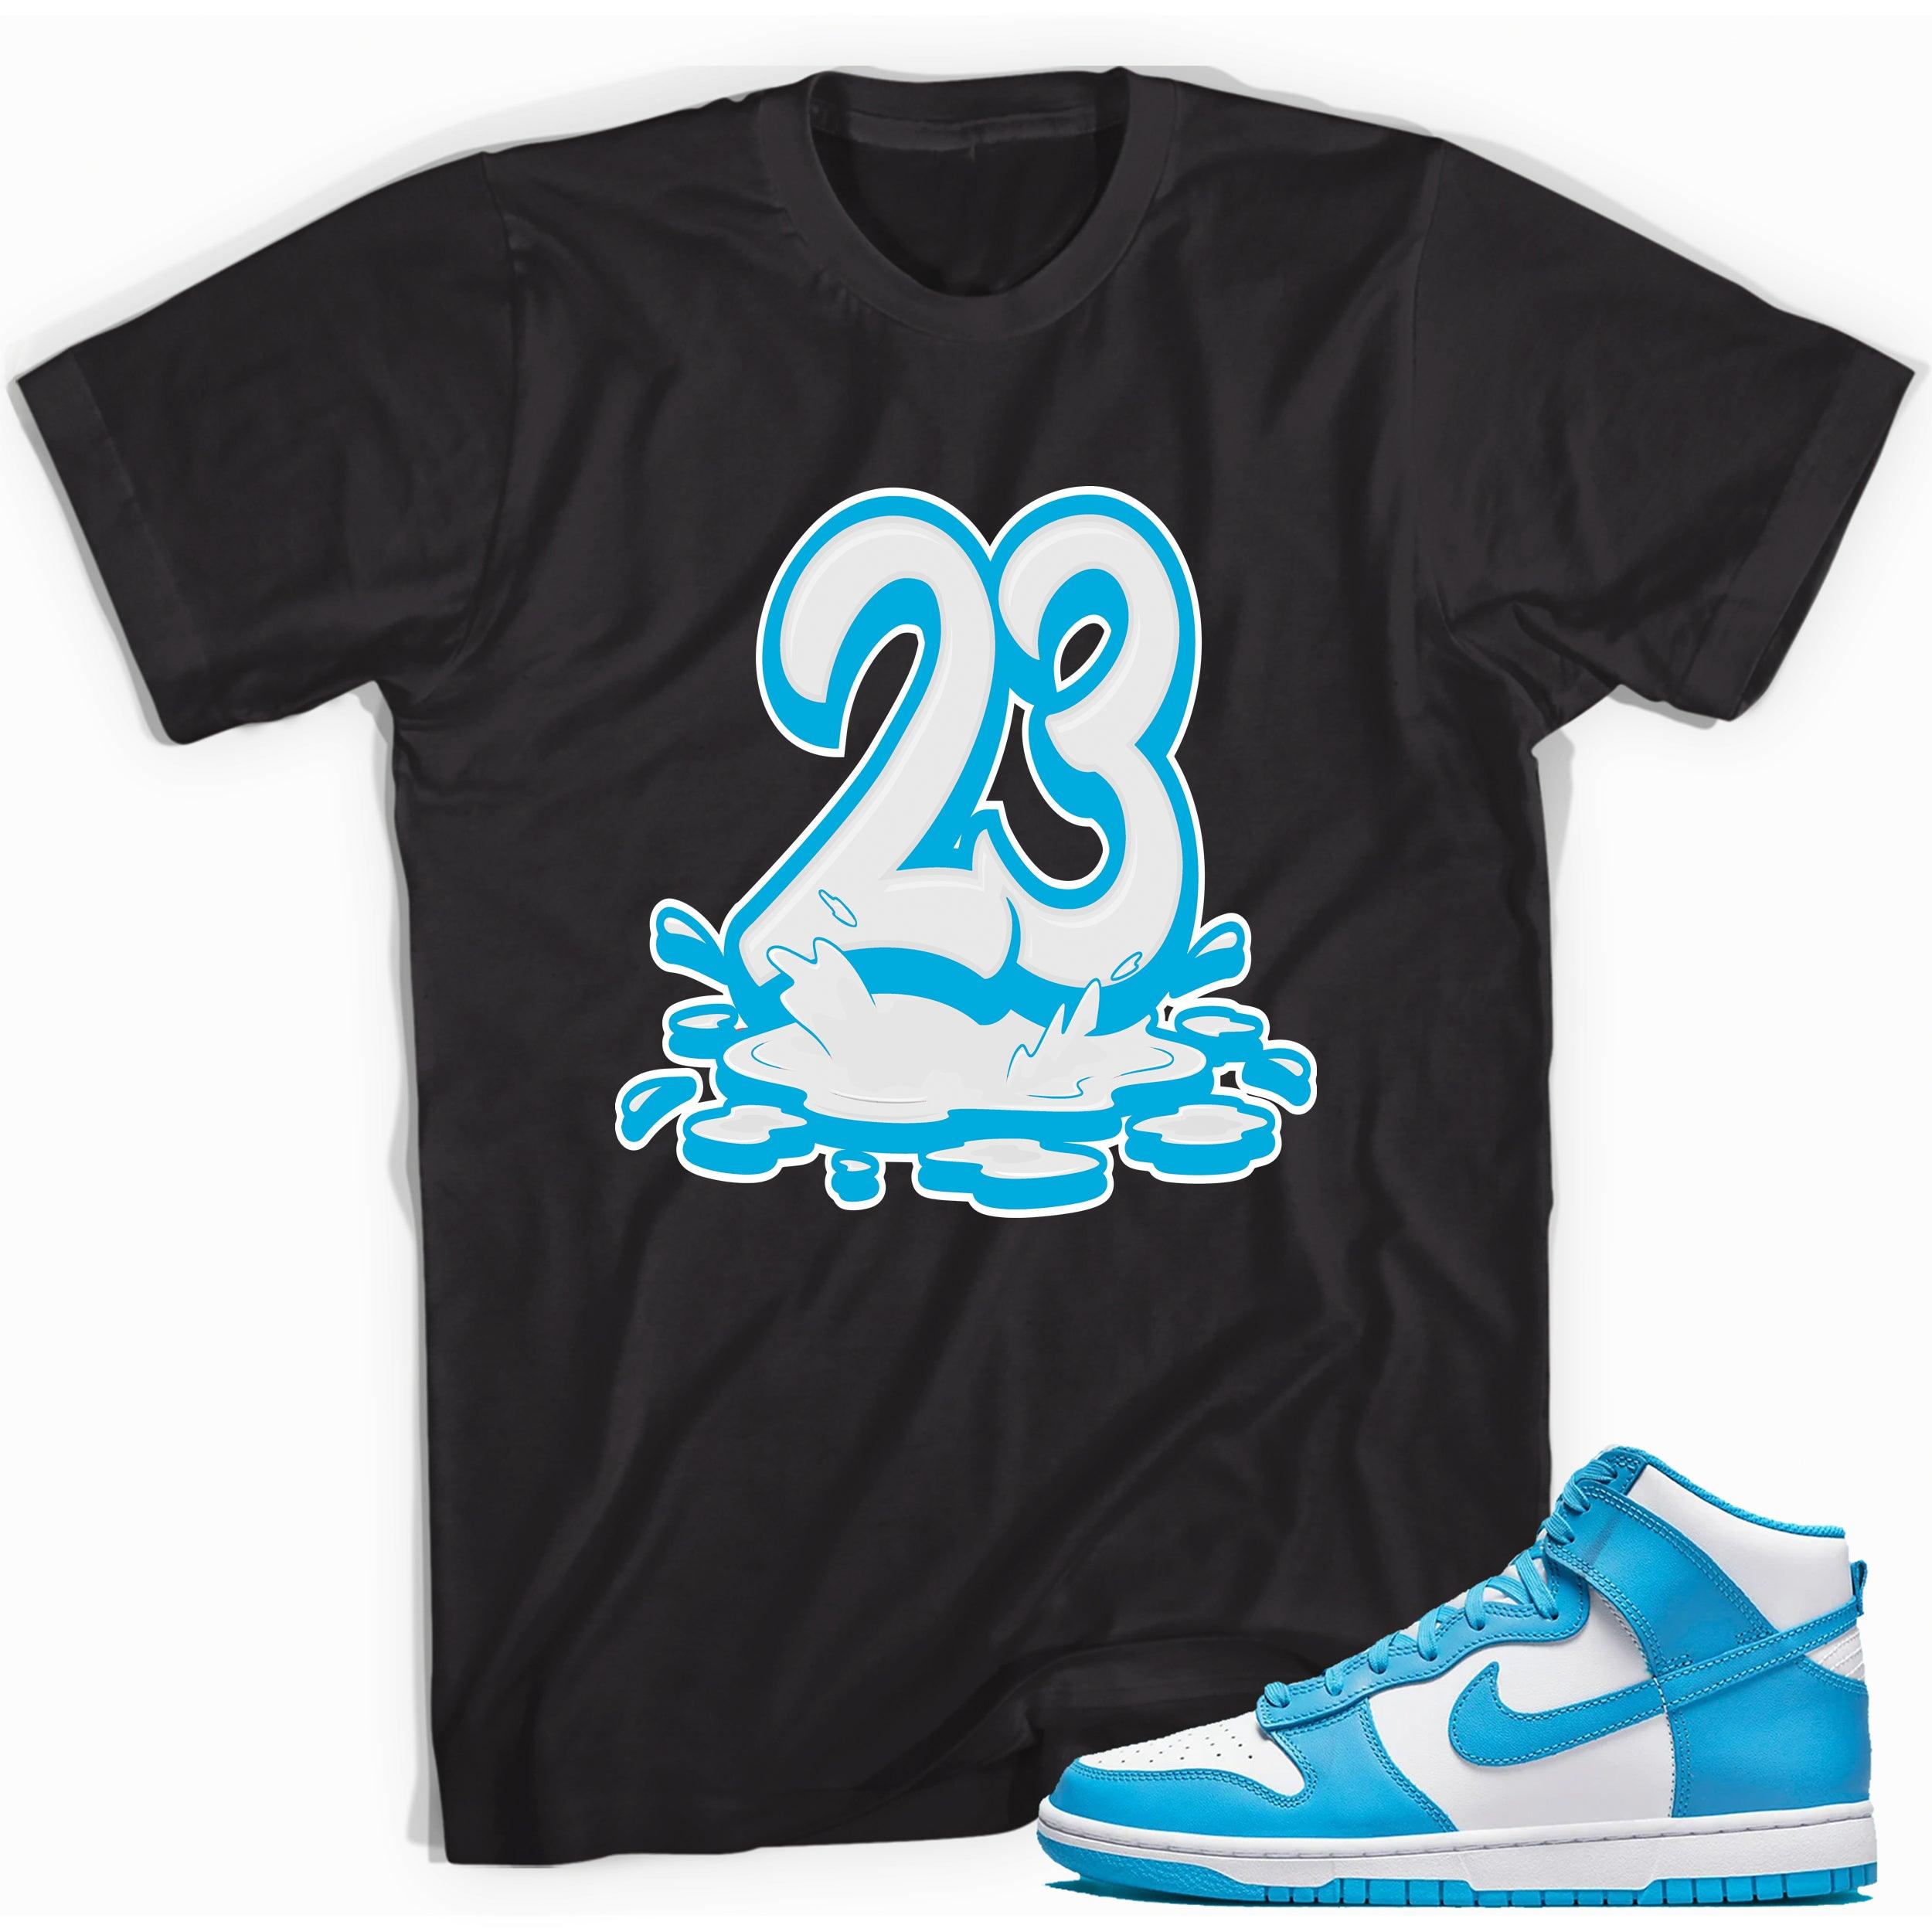 23 Melting Shirt Nike Dunk High Retro Laser Blue photo